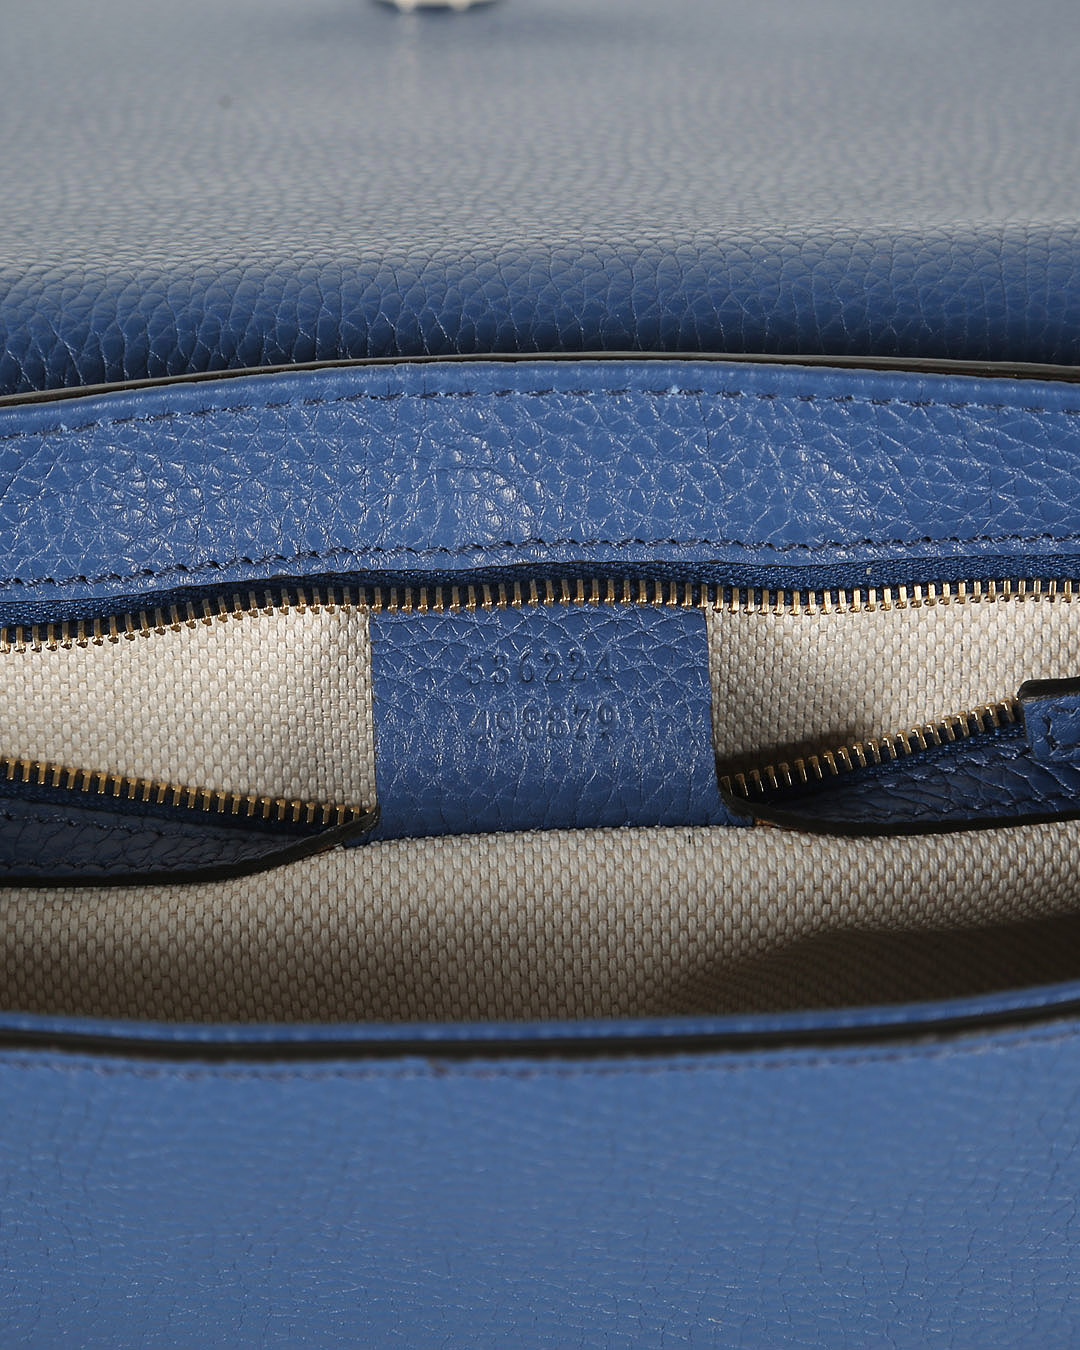 Gucci Blue Grained Leather Soho Cahi GG Shoulder Bag